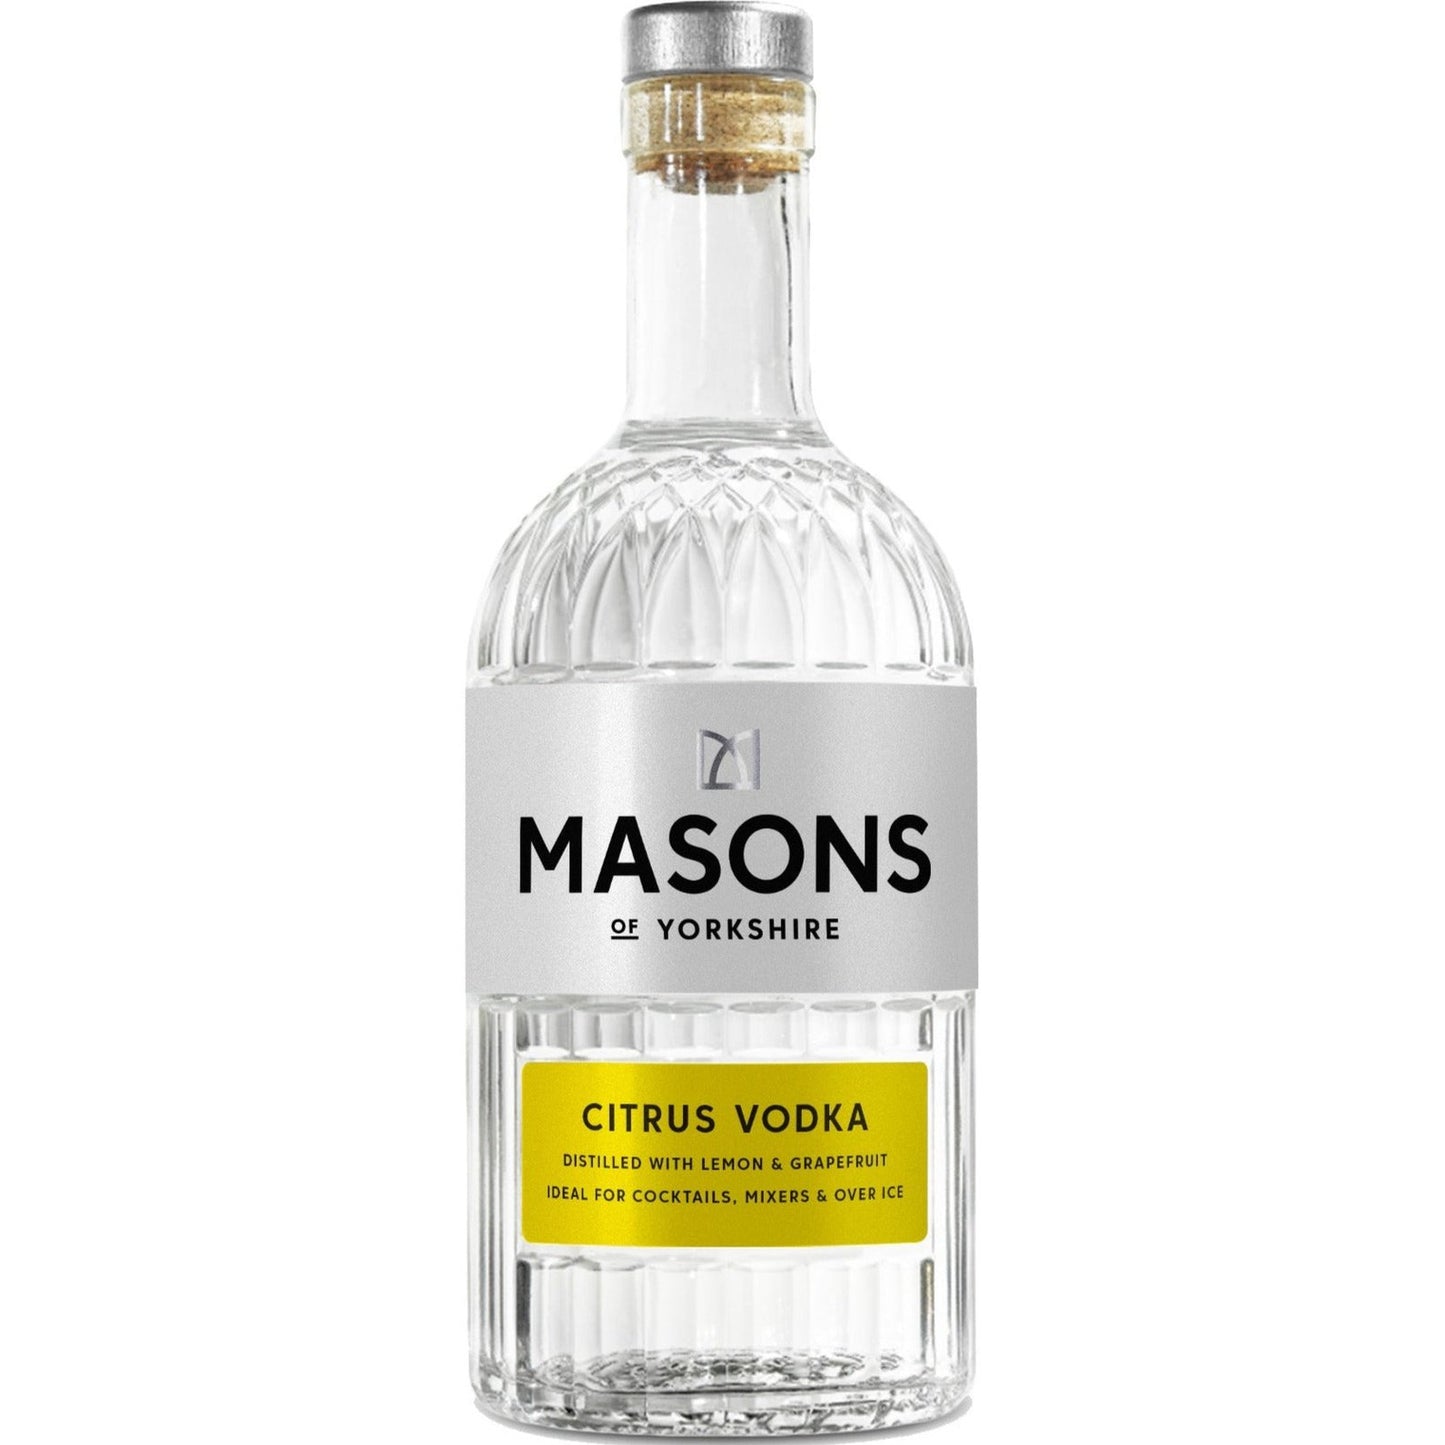 Mason of Yorkshire Citrus Vodka 40% 70cl